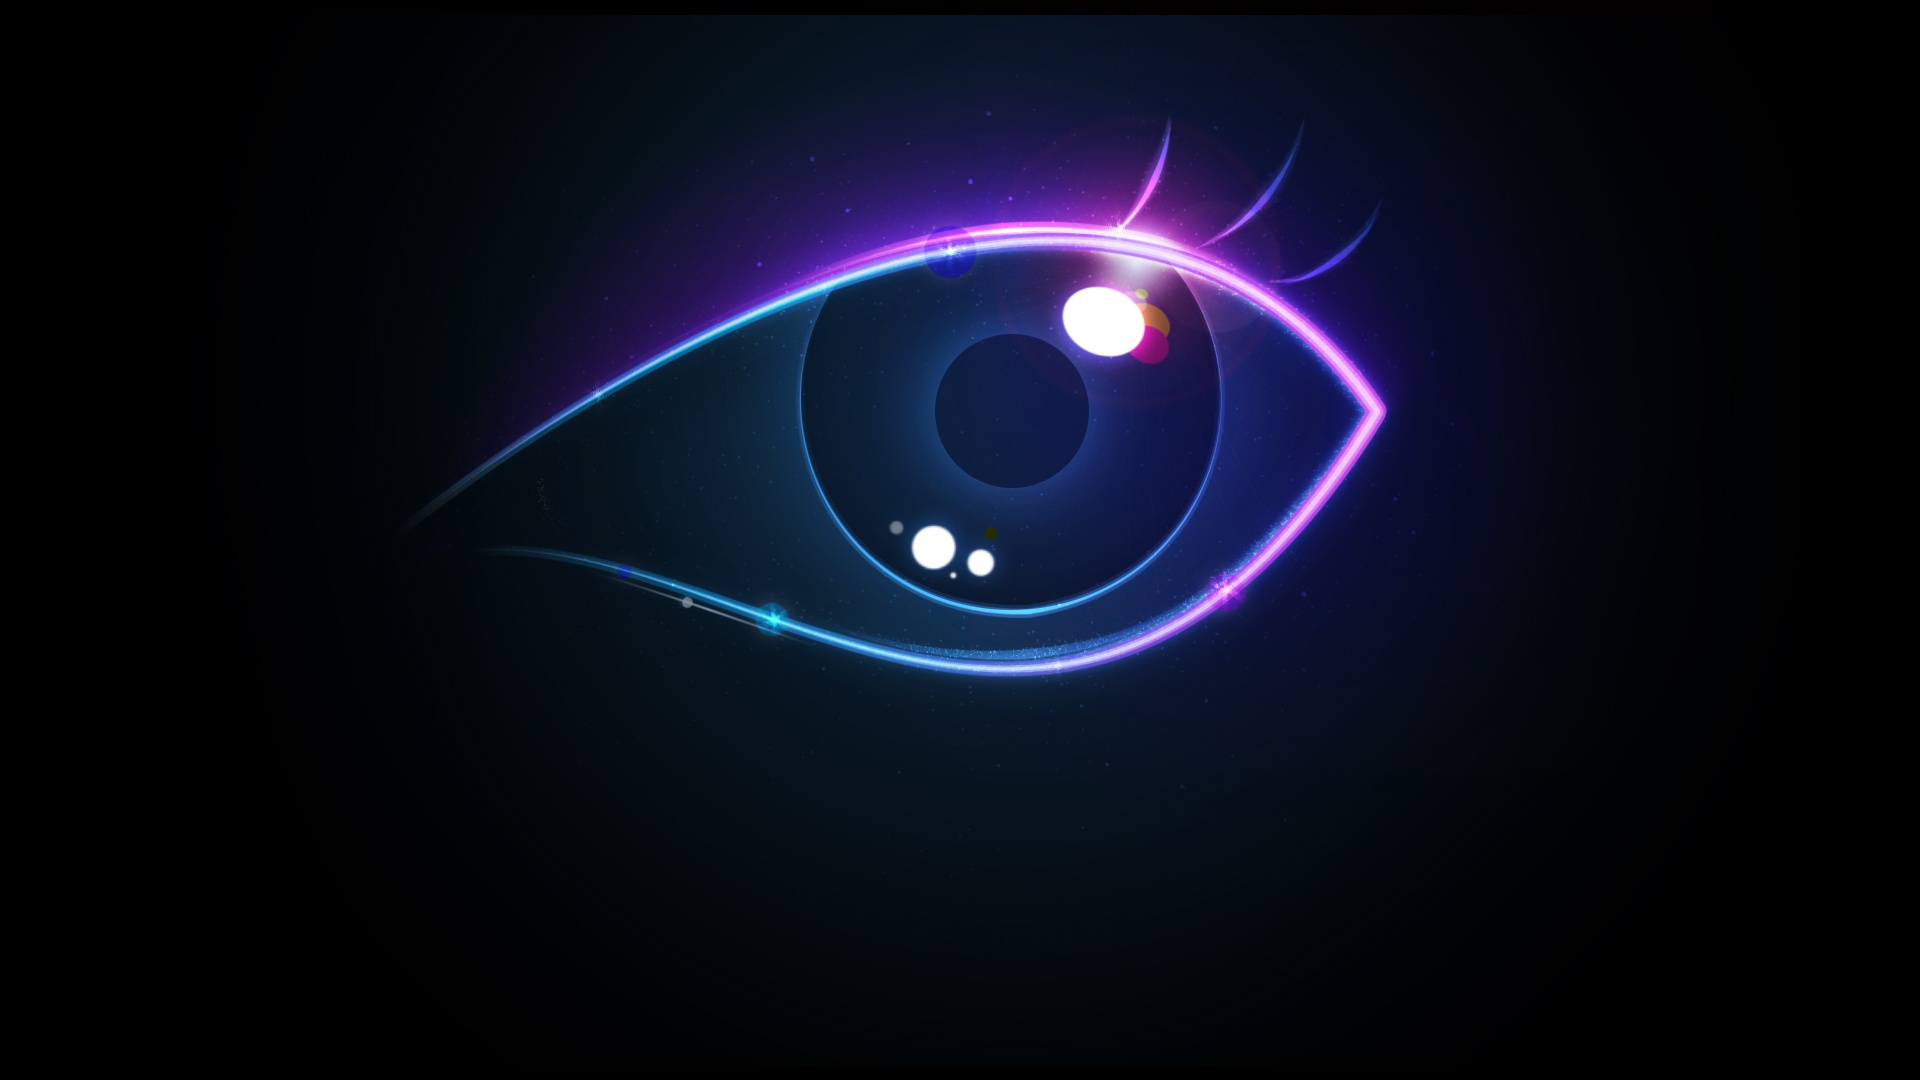  Download Creative Colorful Eye wallpaperdesktop background